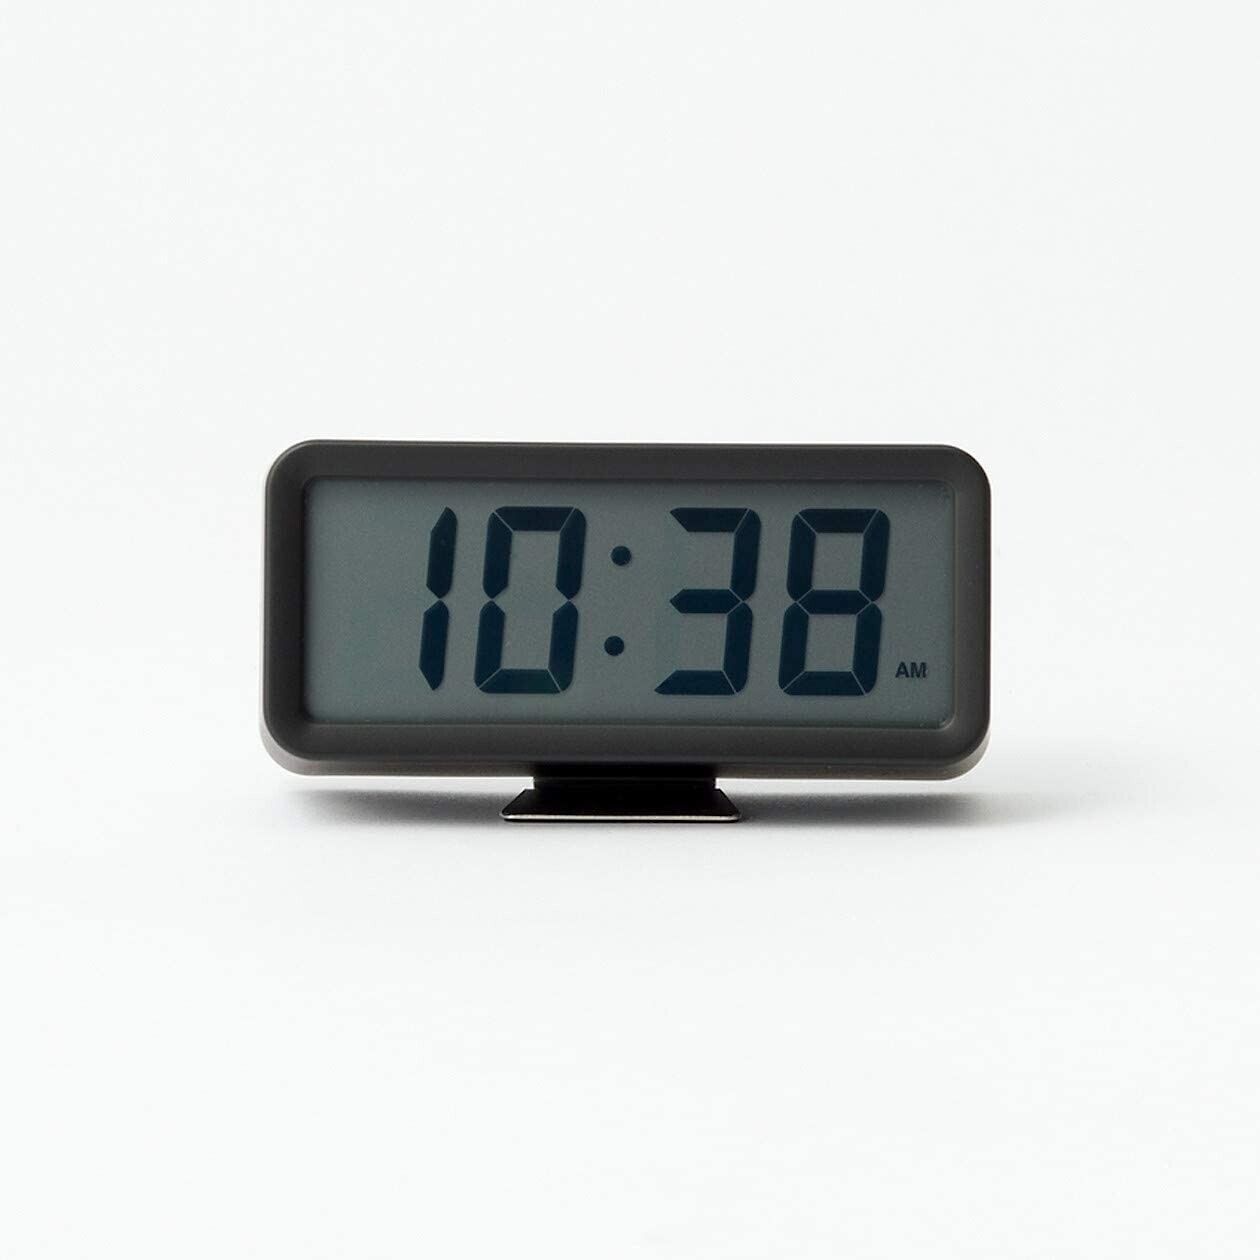 MJ-DCSW1 MUJI Digital Clock Small (Alarm Function) black / Model: MJ-DCSW1